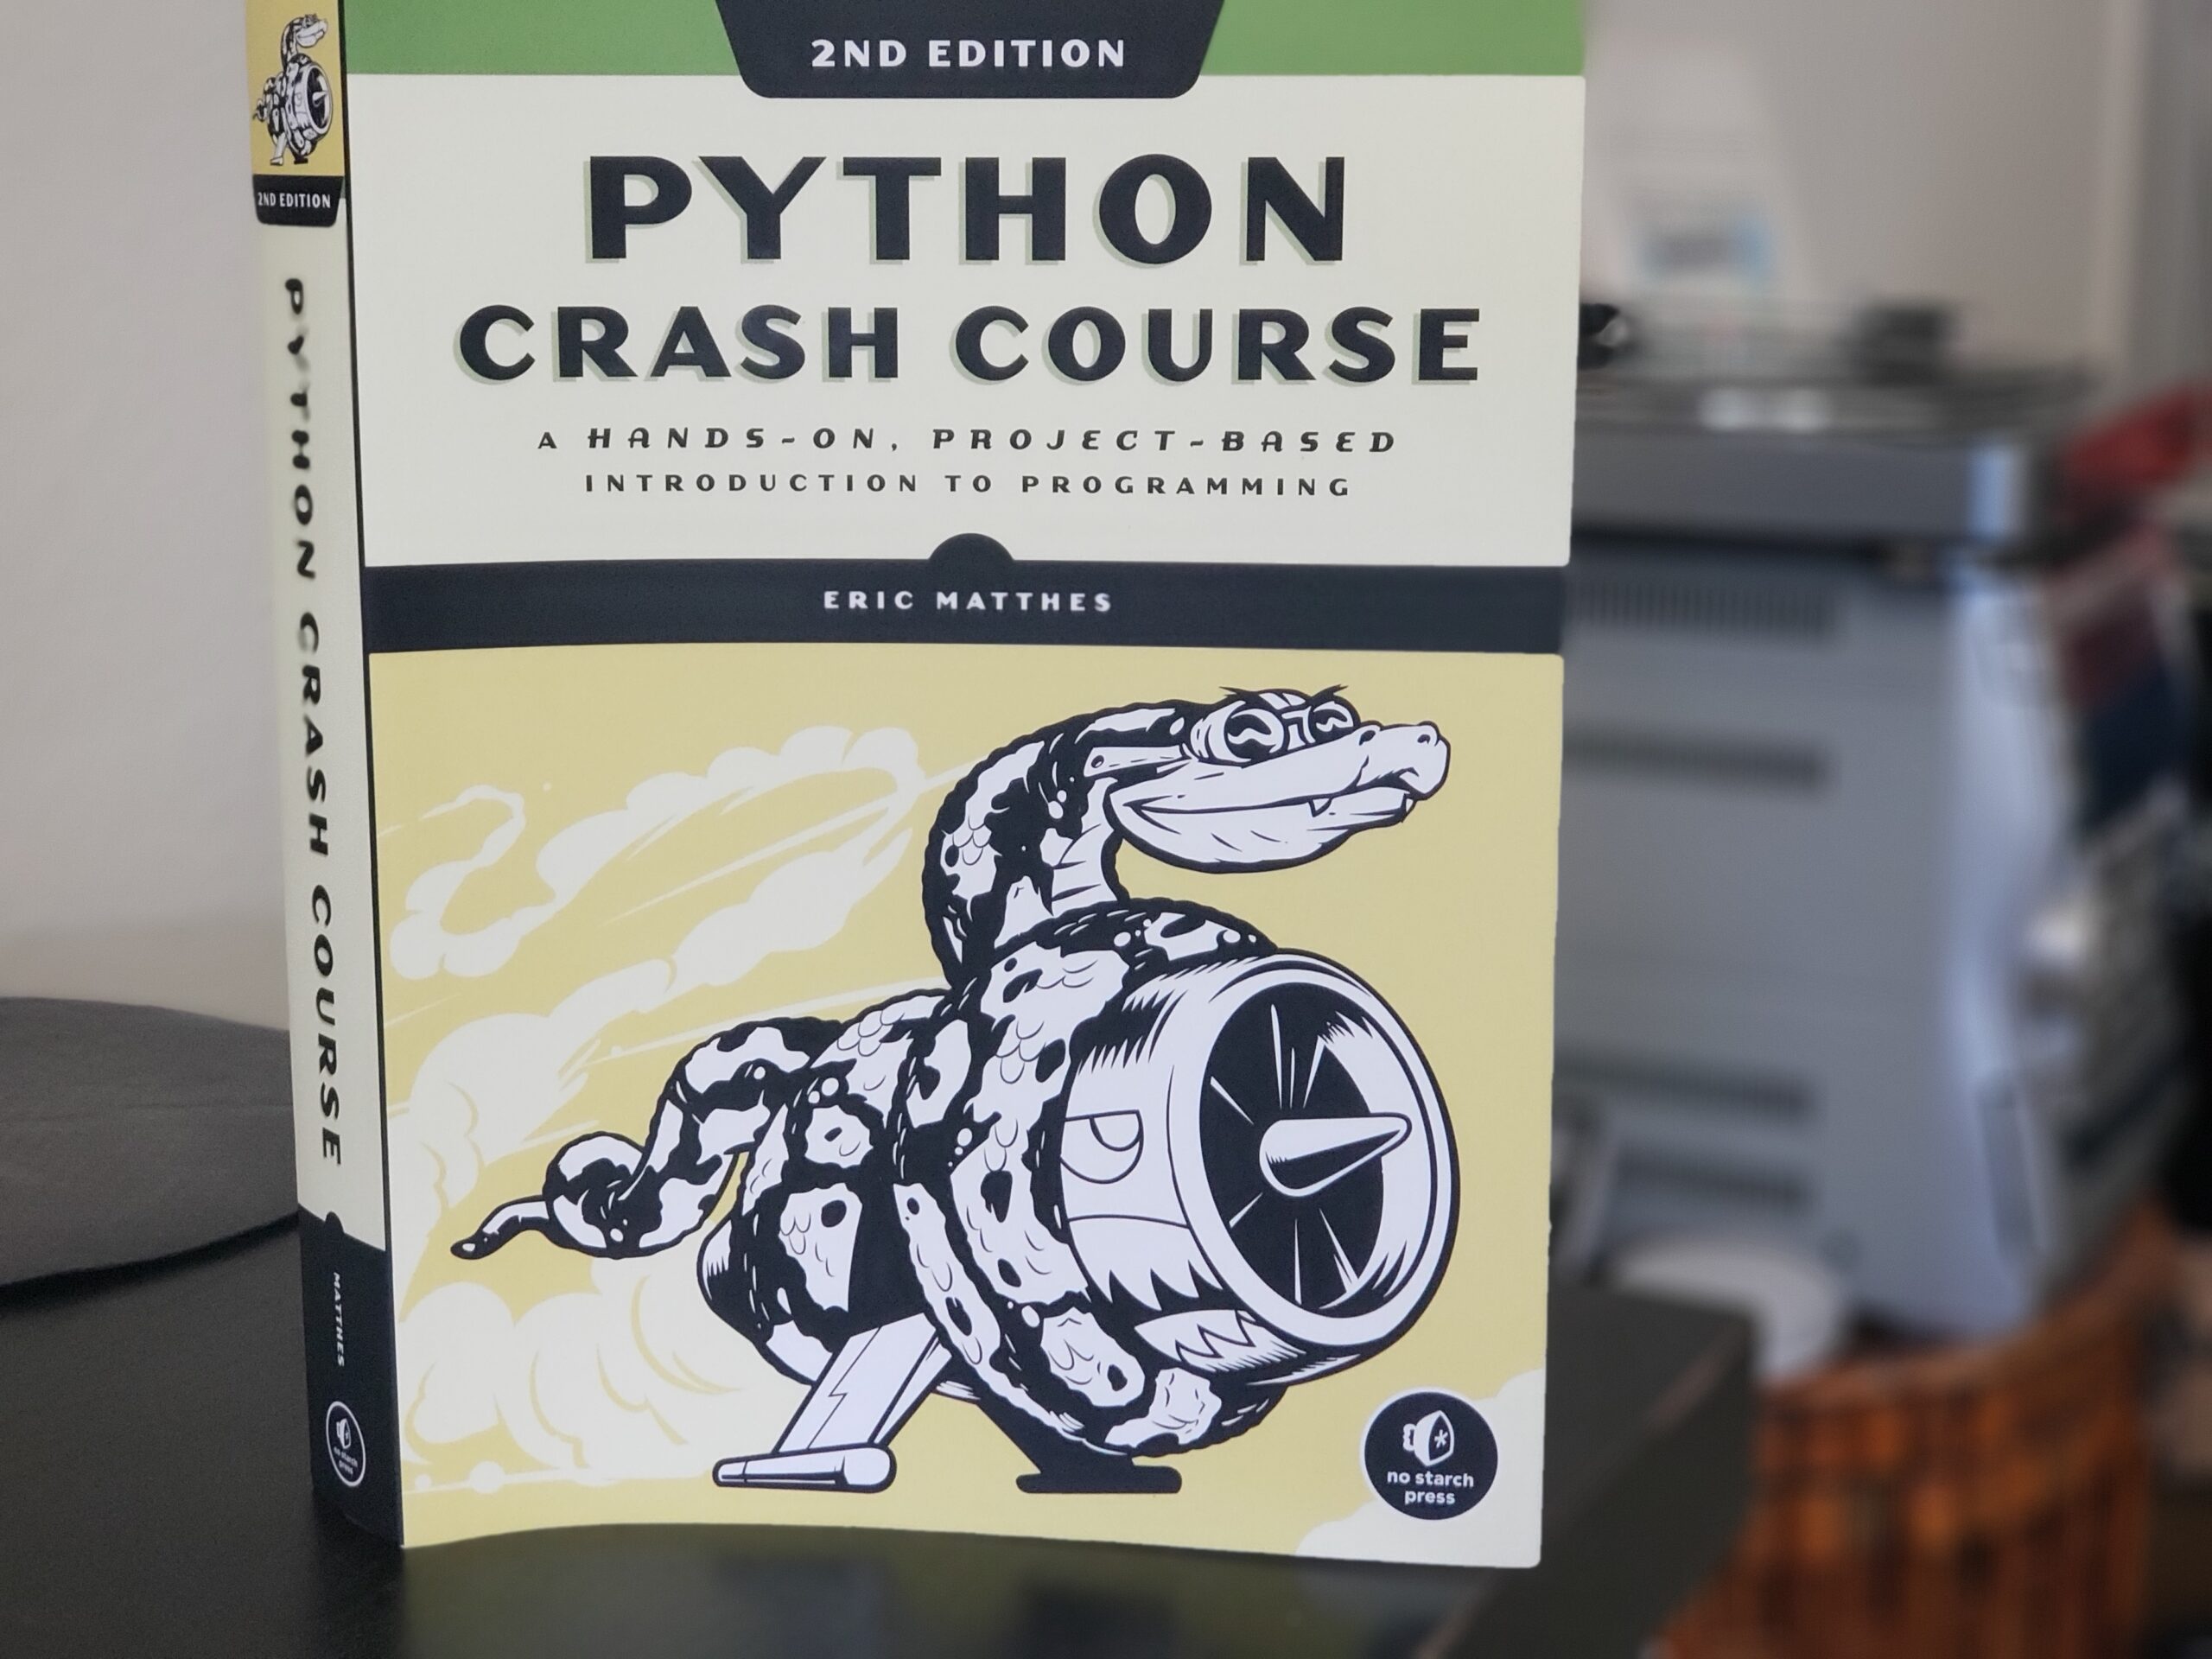 Python Crash Course book cover. Photo by: Matthew McGuire